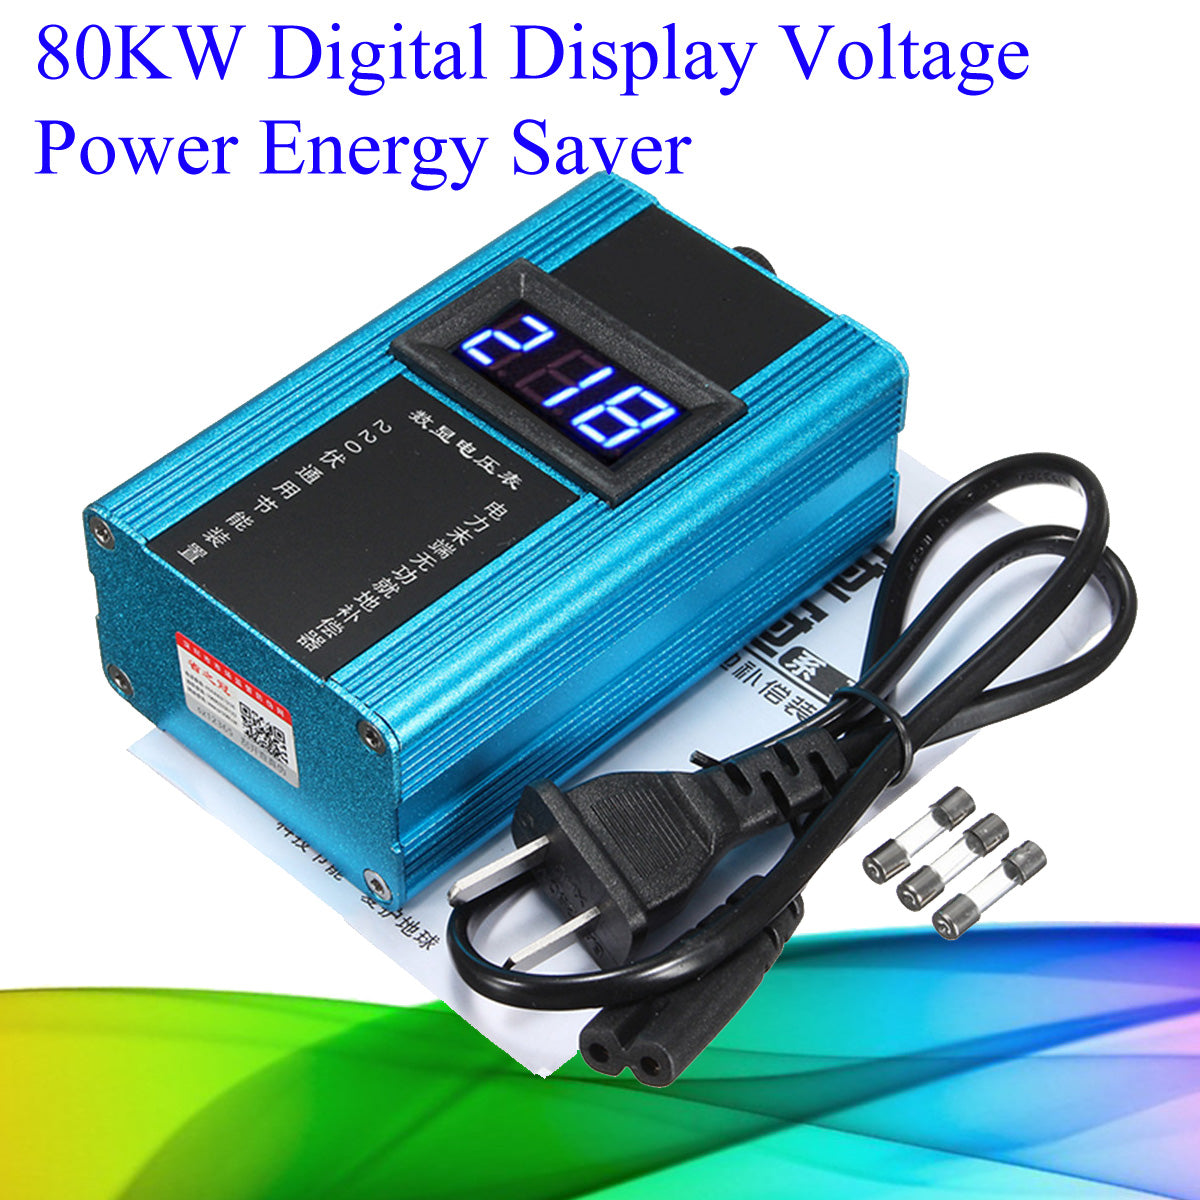 80KW Metal Household Digital Display Voltage Power Energy Saver Box 110V-220V